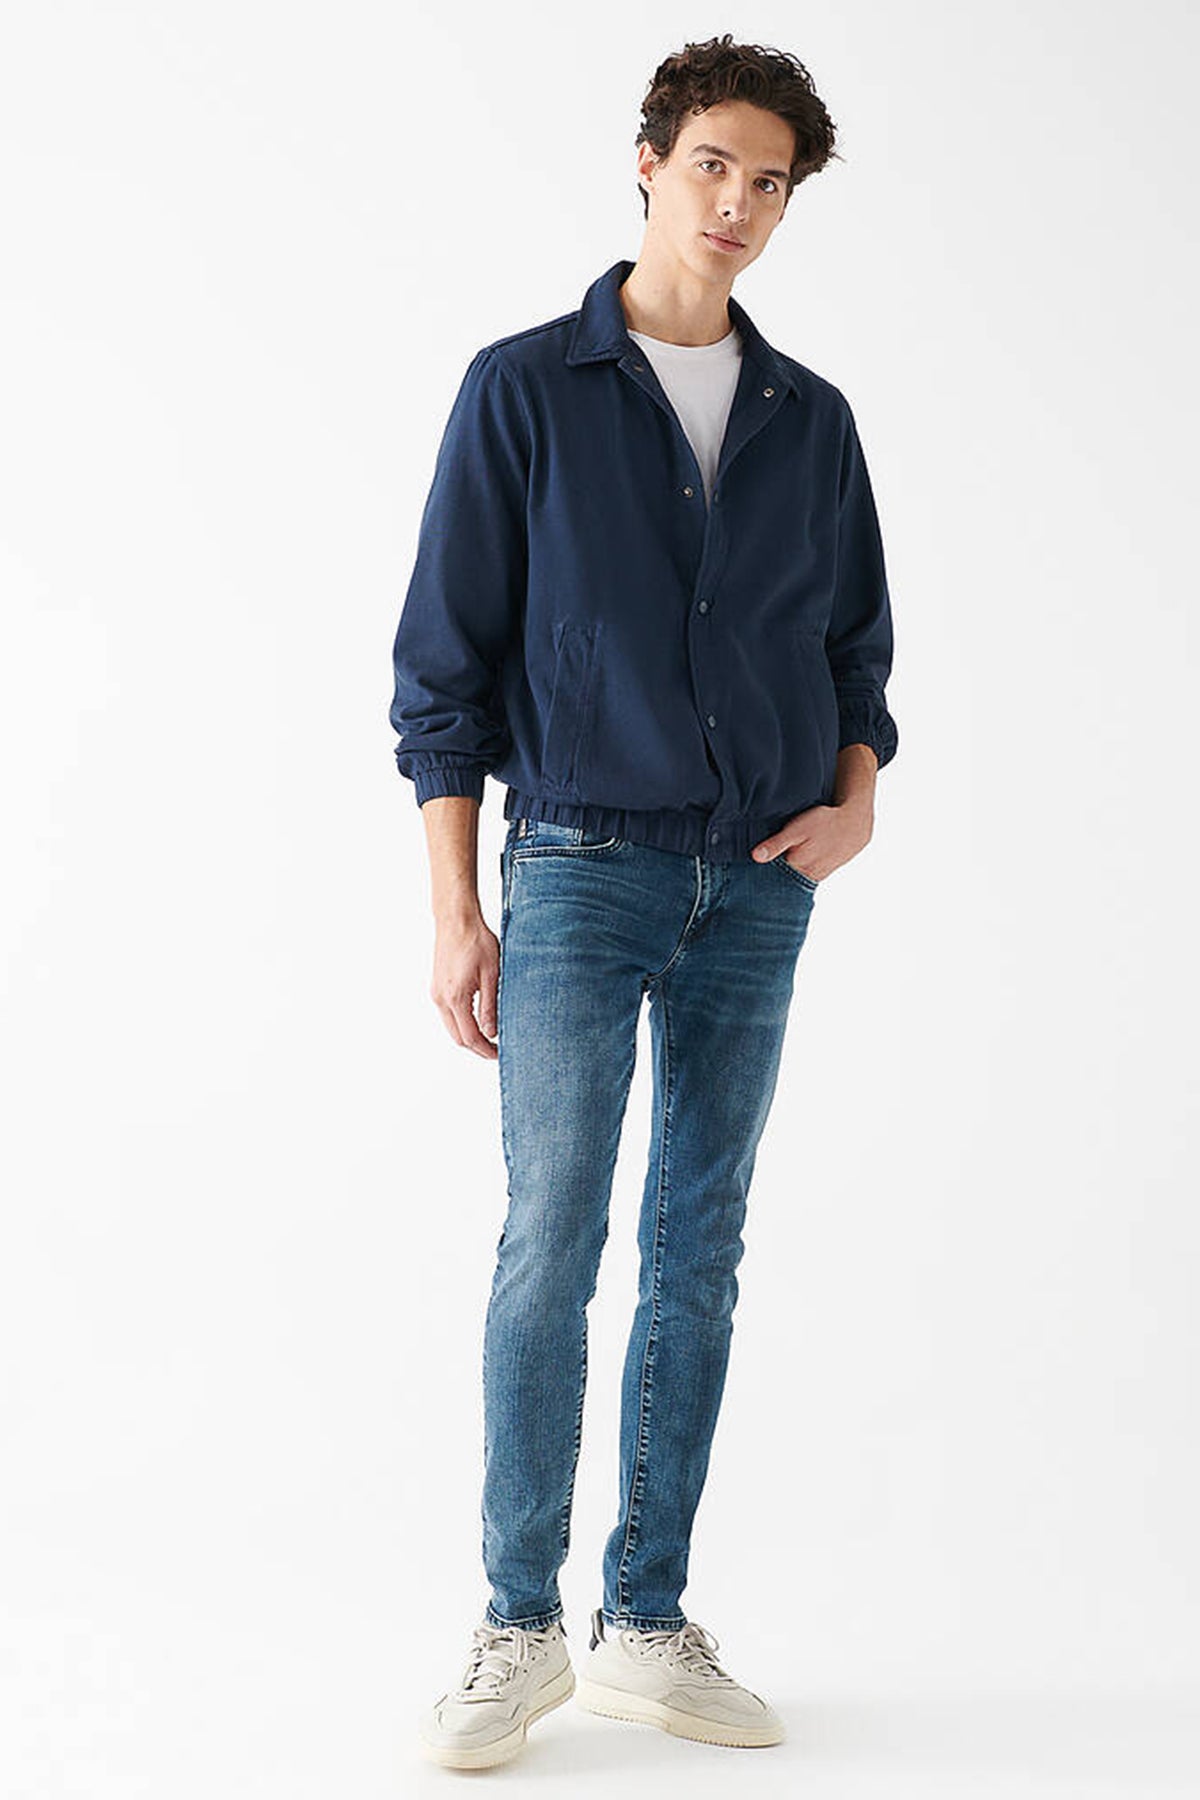 Mavi James Pamuklu Normal Bel Skinny Dar Paça Jeans Erkek Kot Pantolon 0042483027 MAVİ